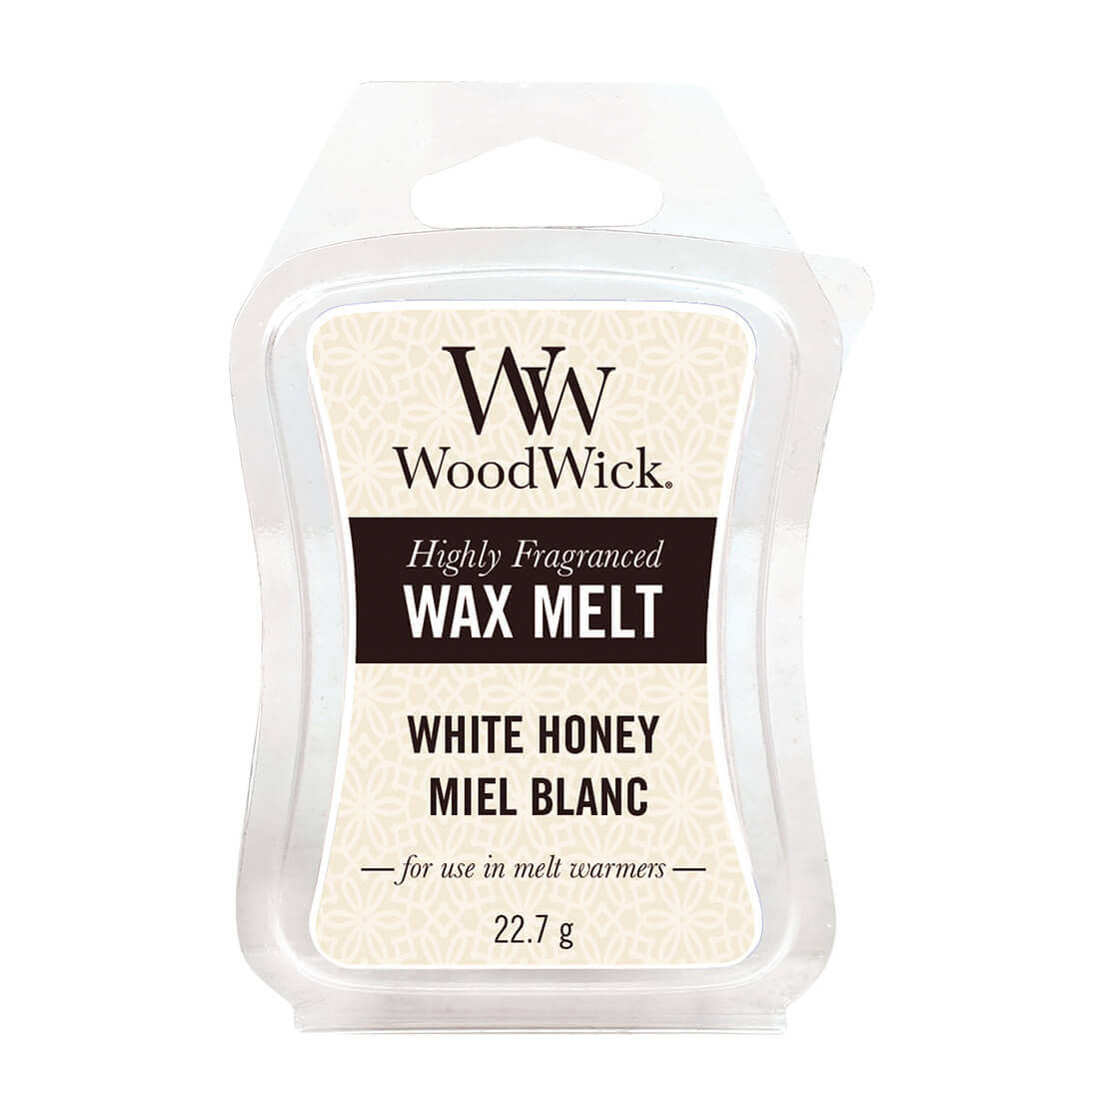 Woodwick White Honey Wax Melt